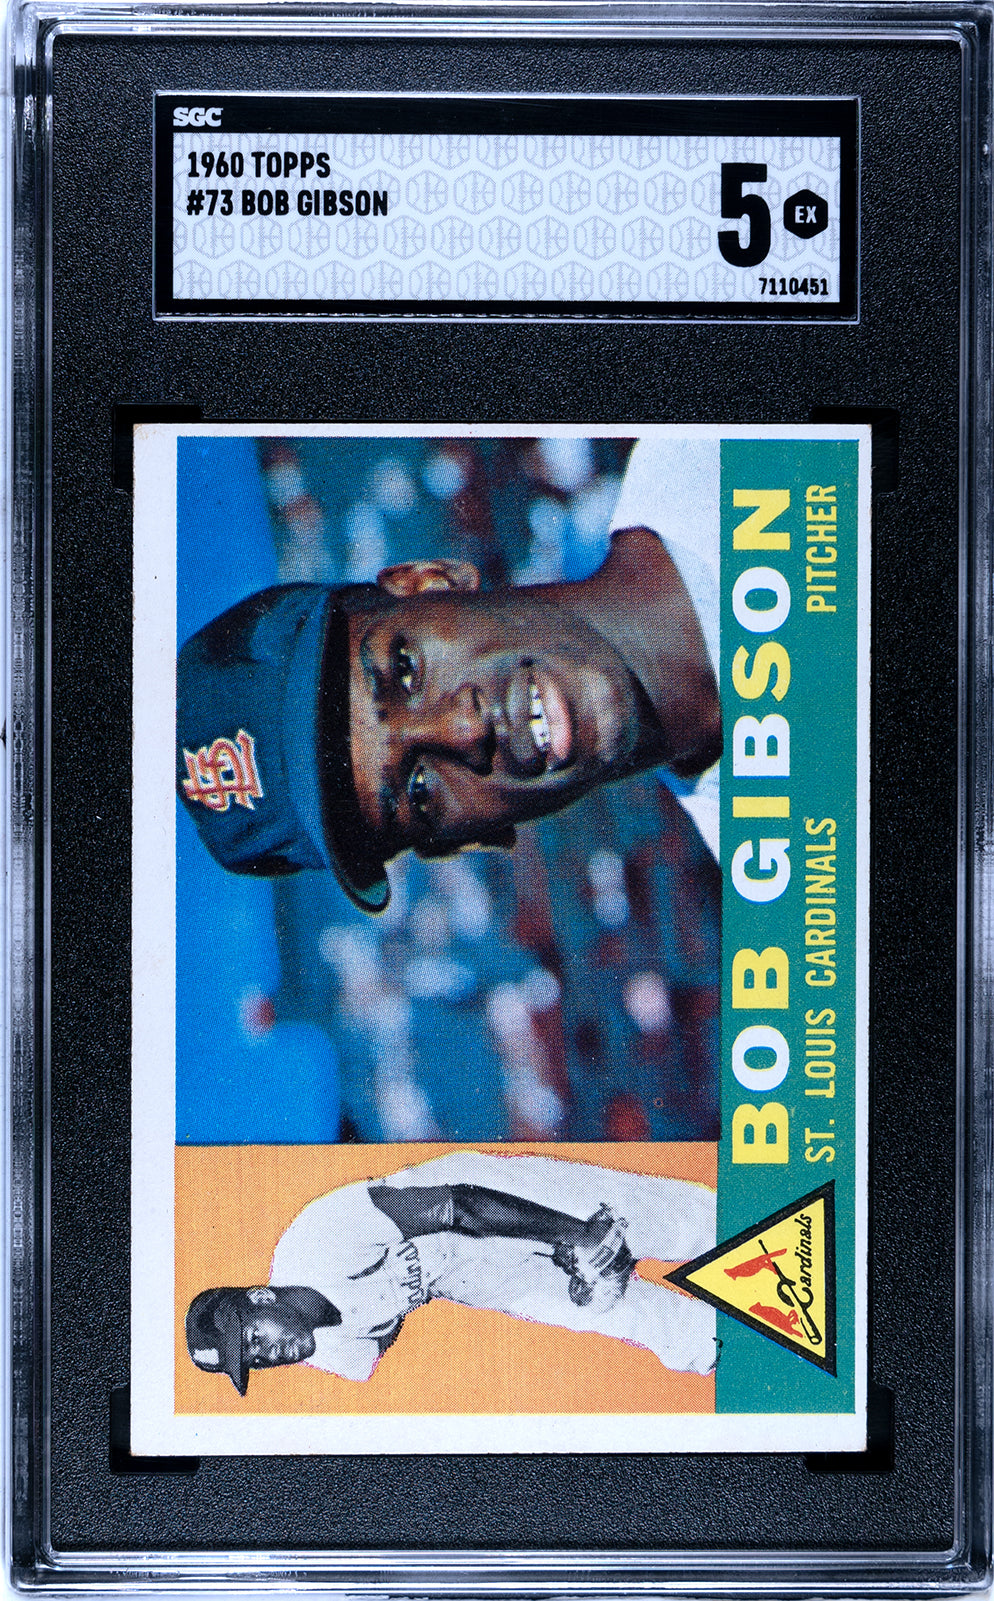 1960 Bob Gibson Baseball Card Wholesale Savings